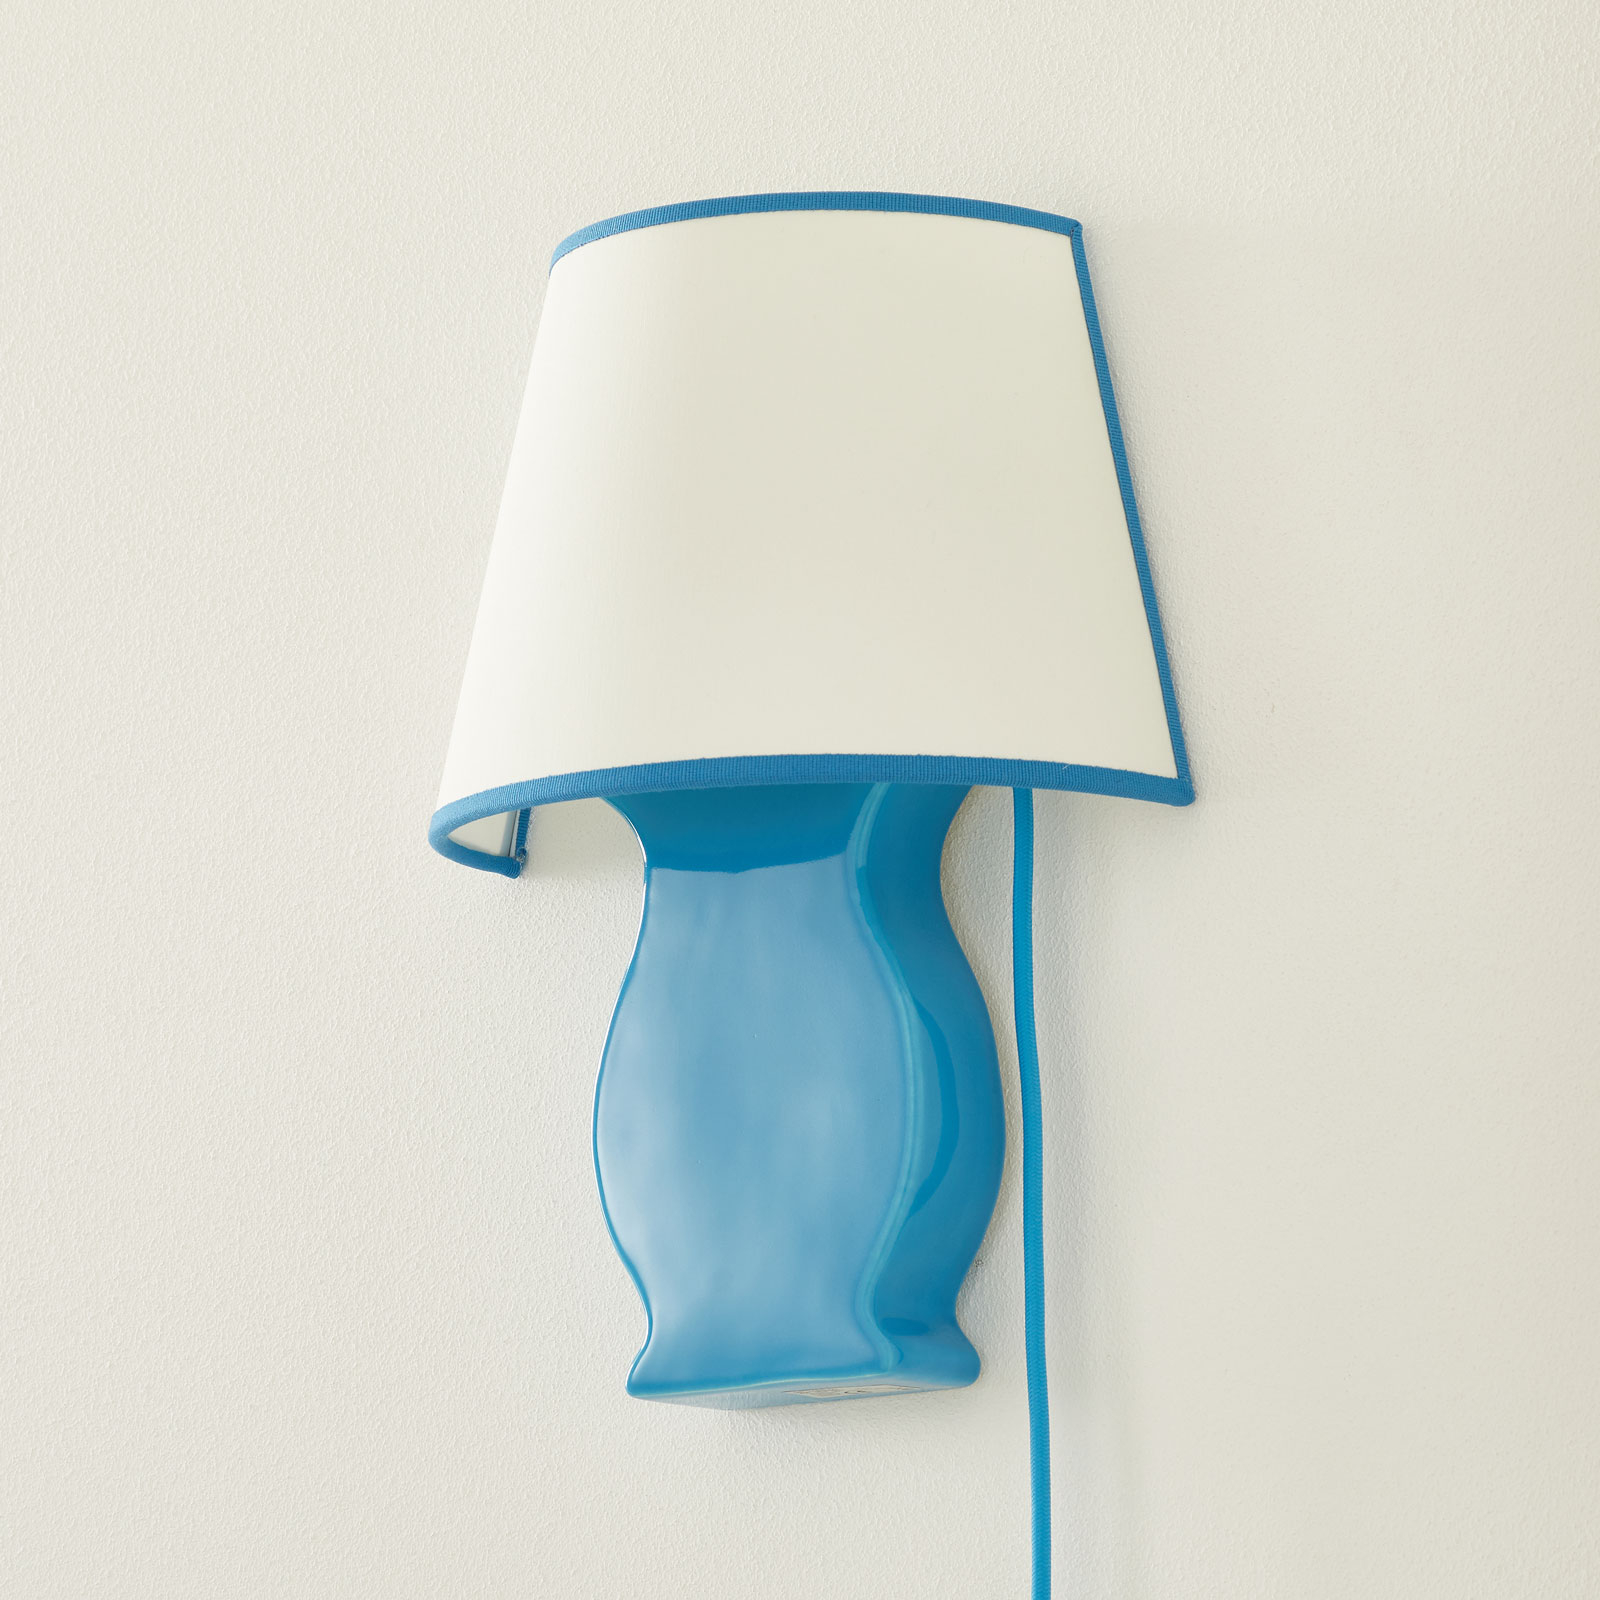 Ceramic wall light A184, with cloth shade, blue